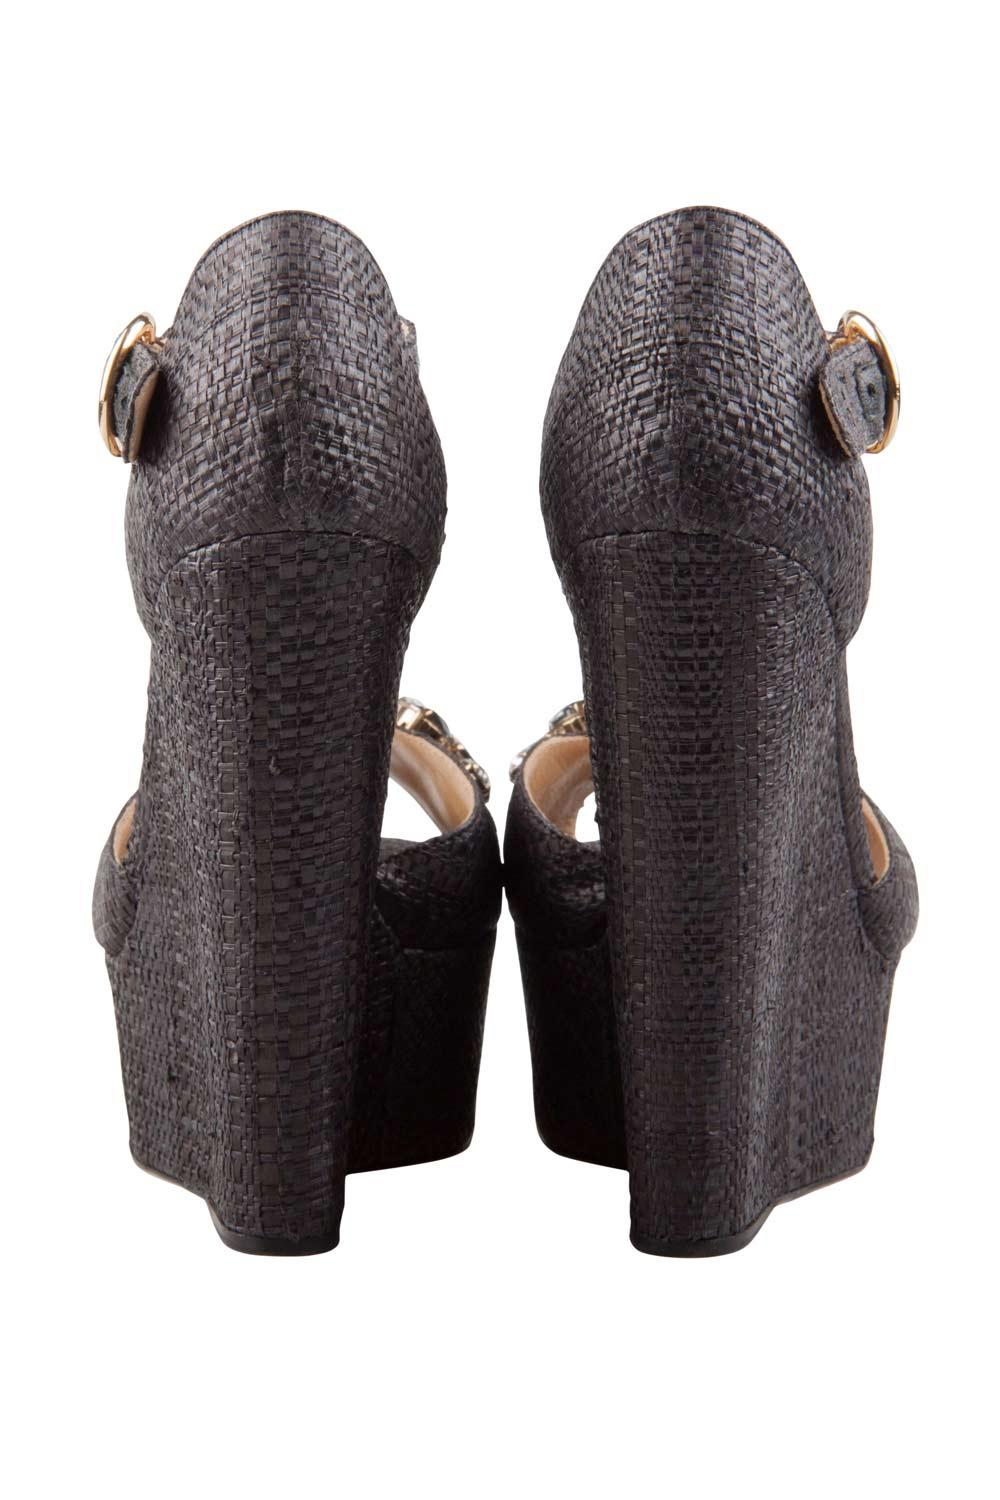 Dolce and Gabbana Black Crystal Embellished Wedge Peep Toe Sandals Size 36 2